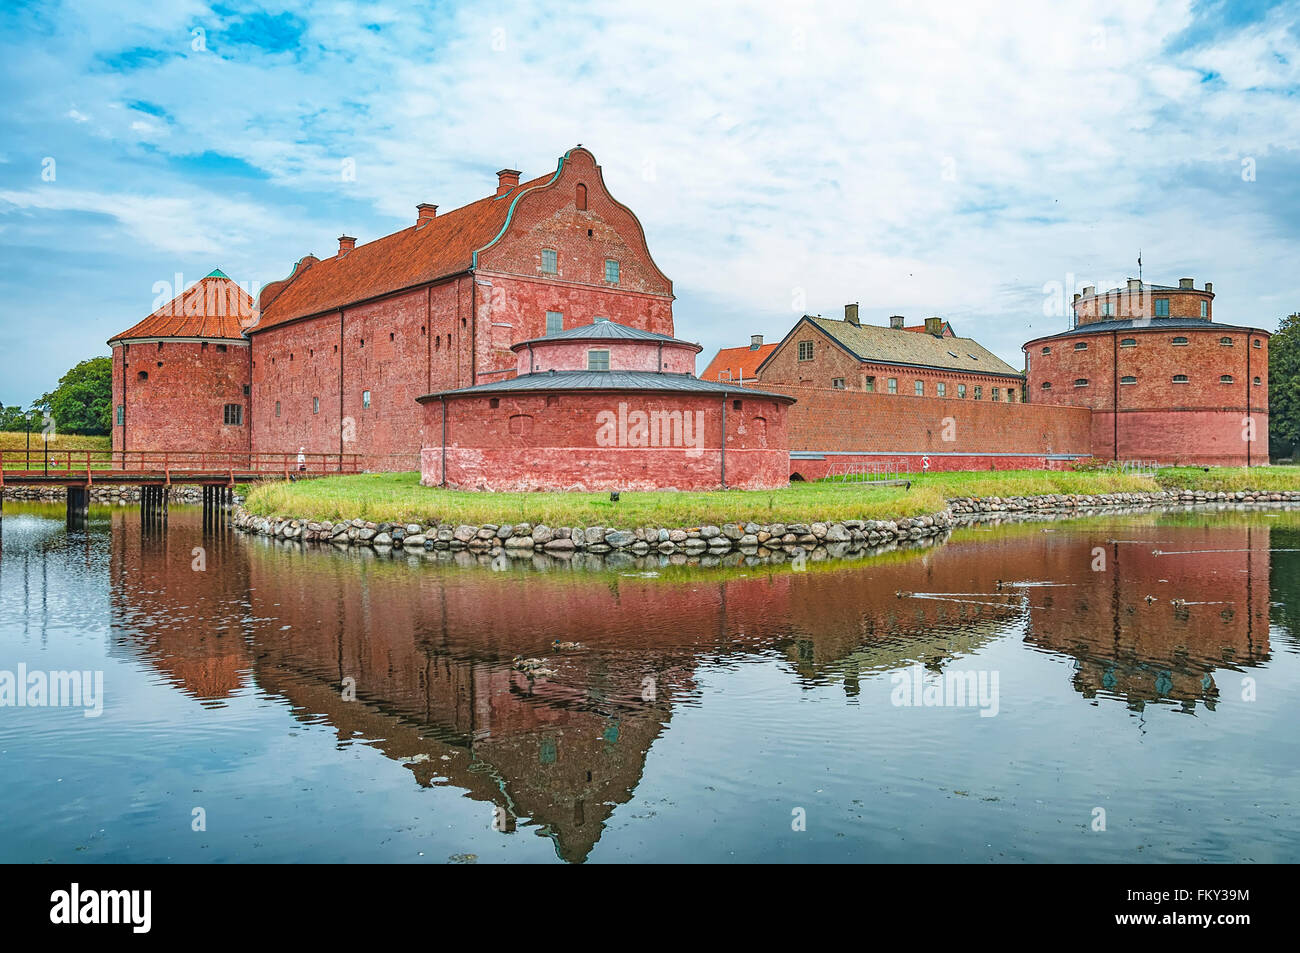 An image of the Landskrona citadel in the skane region of Sweden. Stock Photo